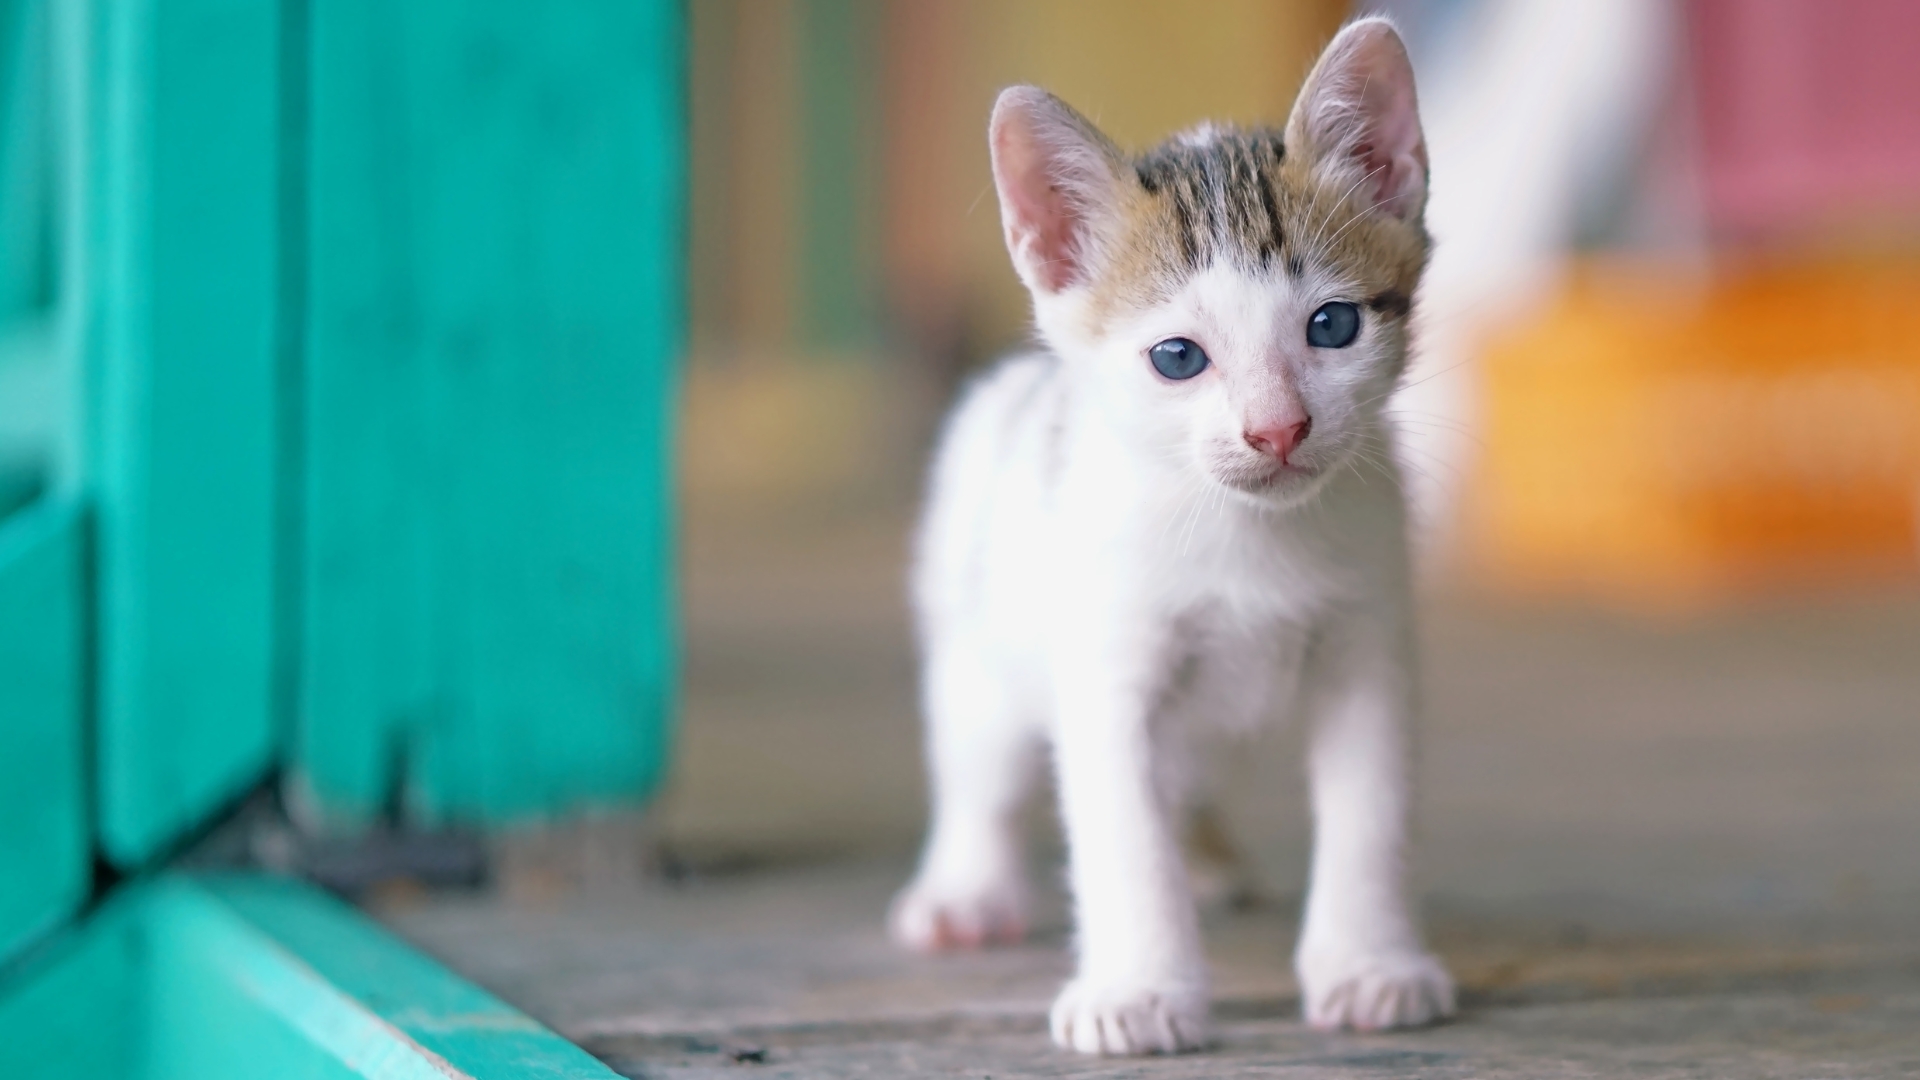 A kitten standing on a wood surface